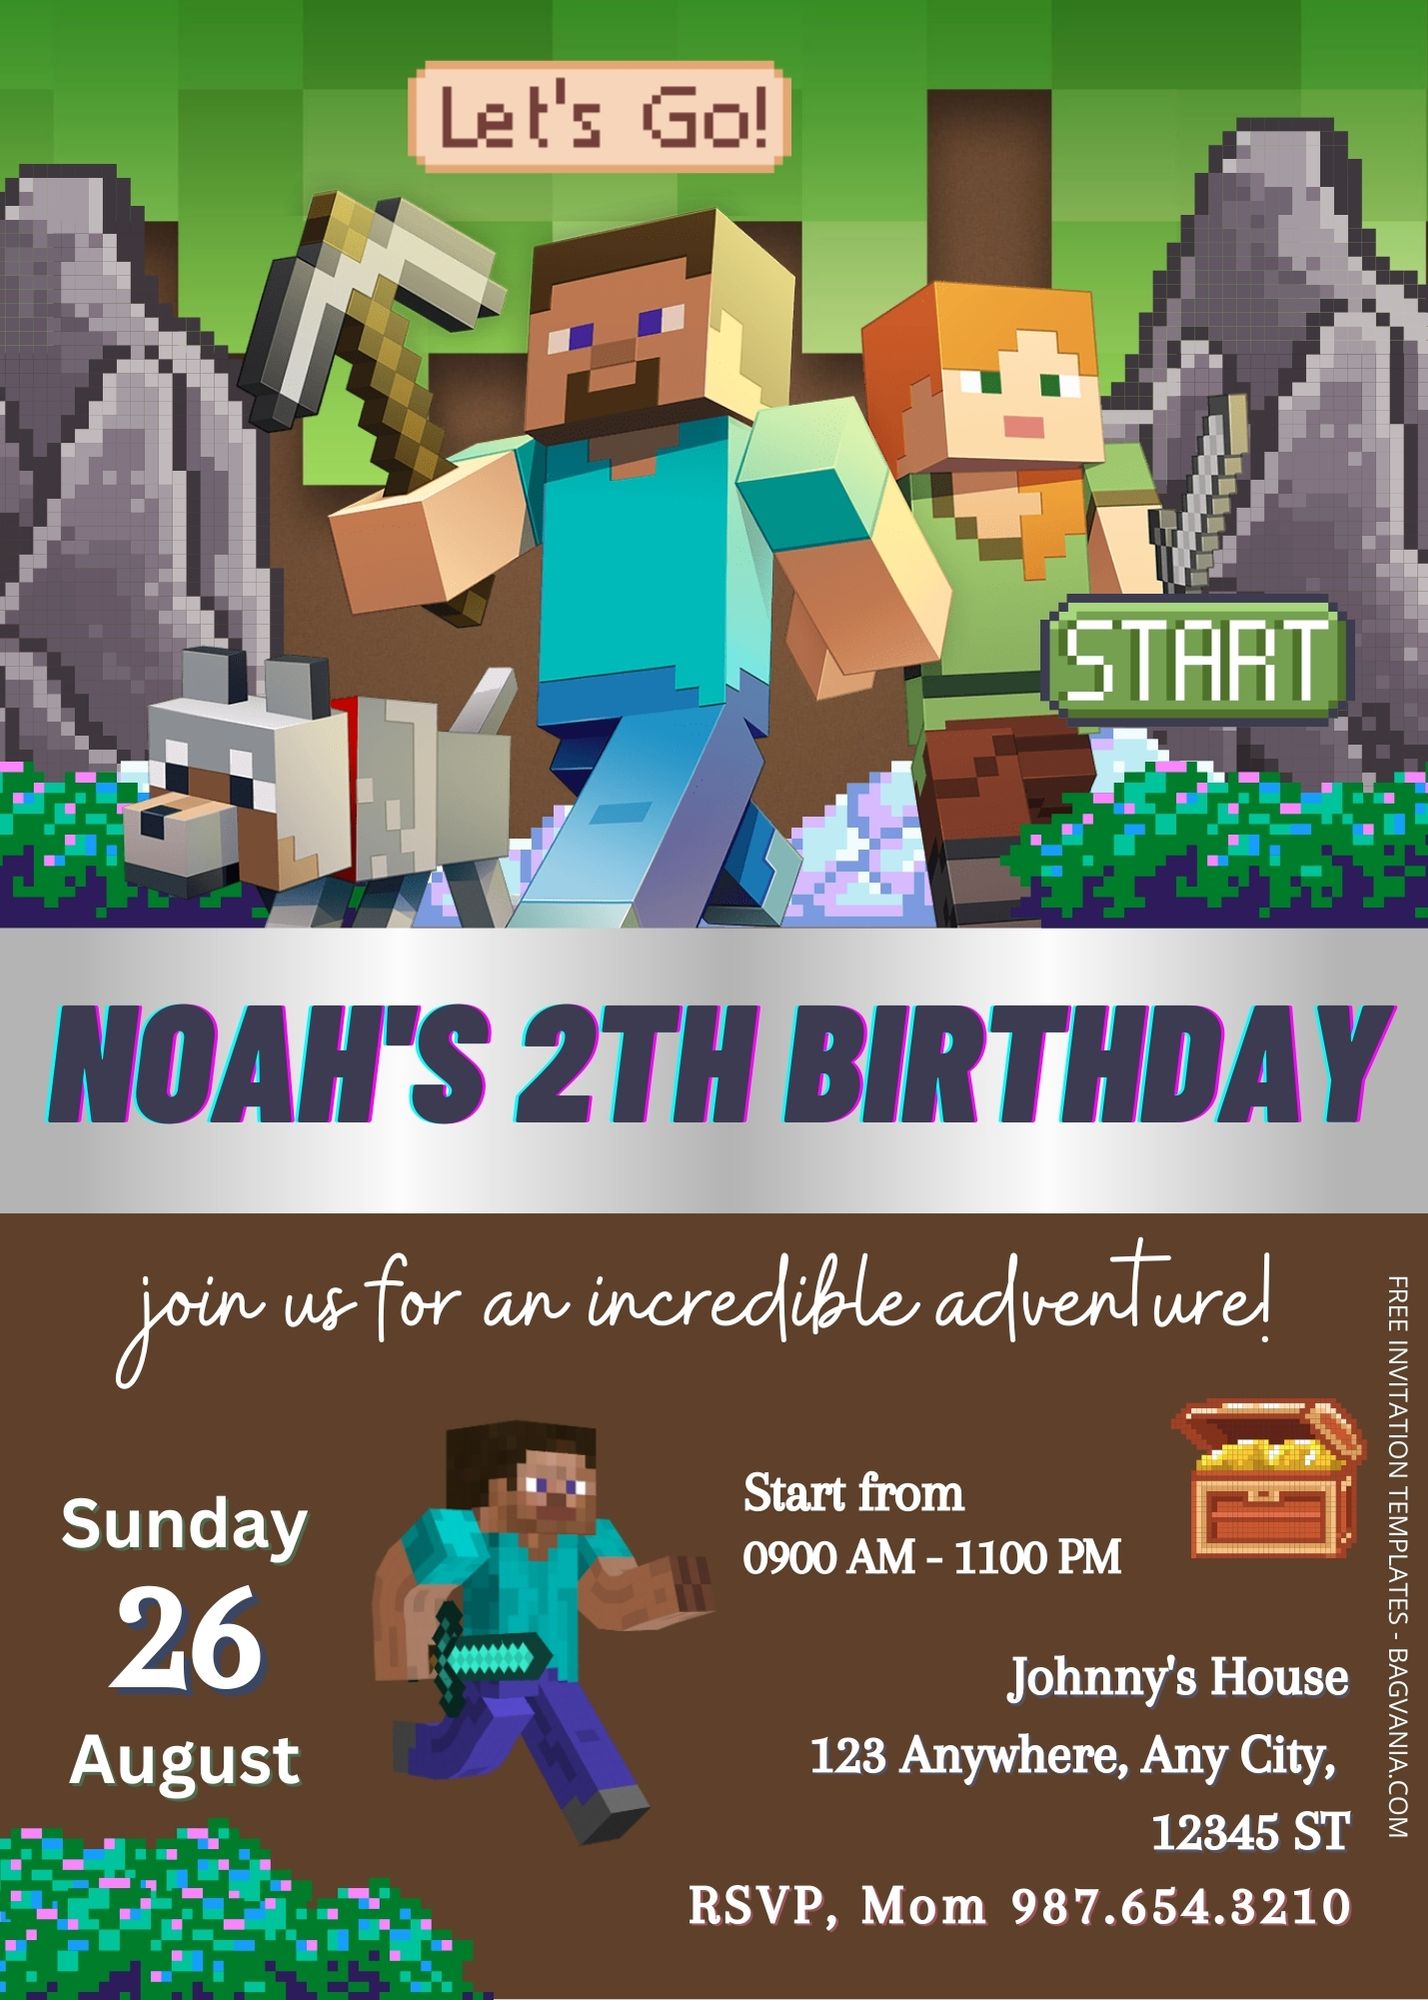 FREE Printable) - Epic Minecraft Baby Shower Invitation Templates   Minecraft birthday invitations, Minecraft birthday, Minecraft invitations